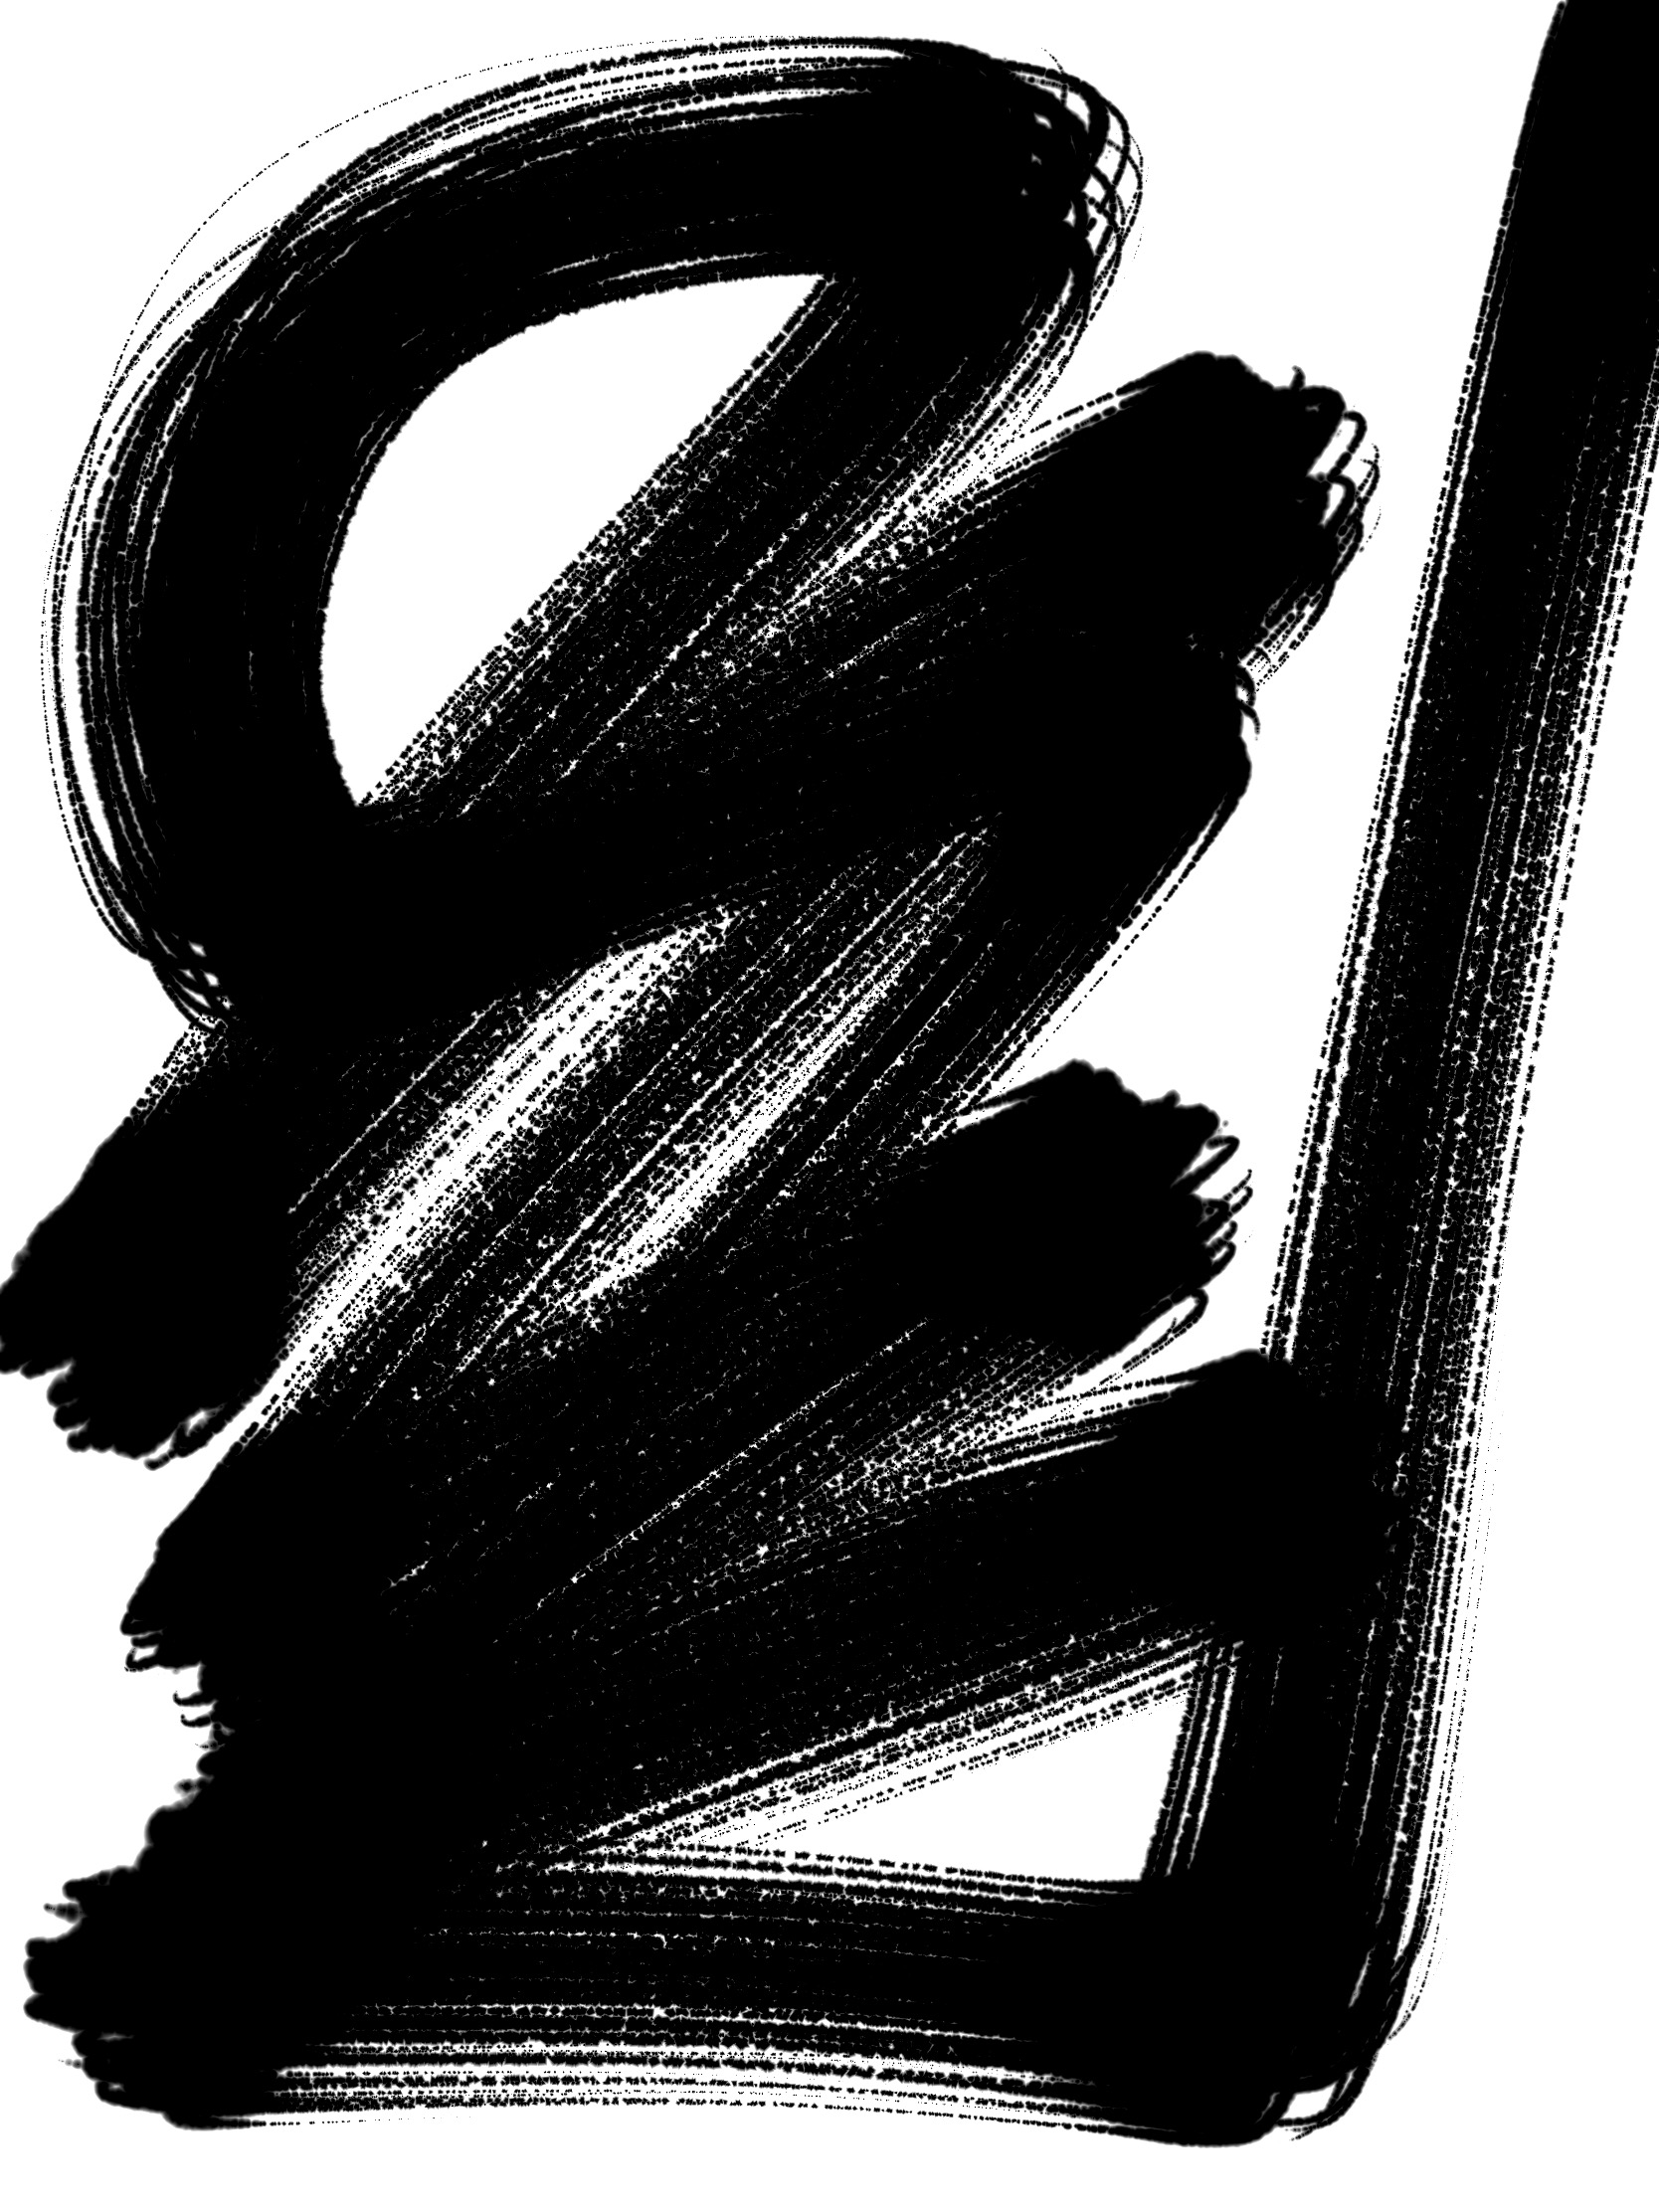 Convenience ERIC KIM abstract zen calligraphy